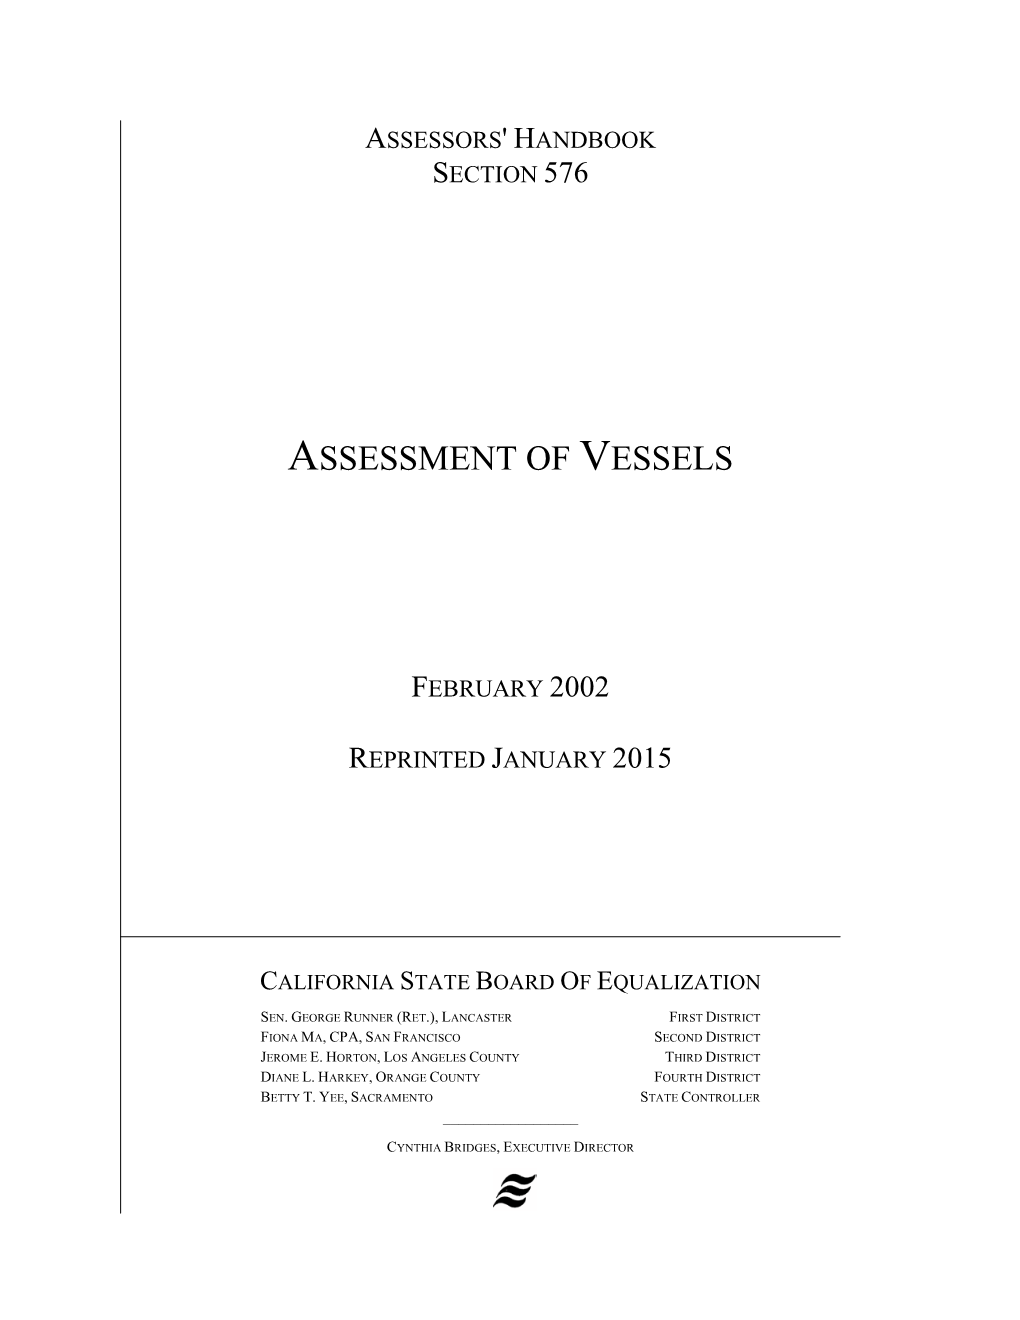 Assessors' Handbook Section 576, Assessment of Vessels